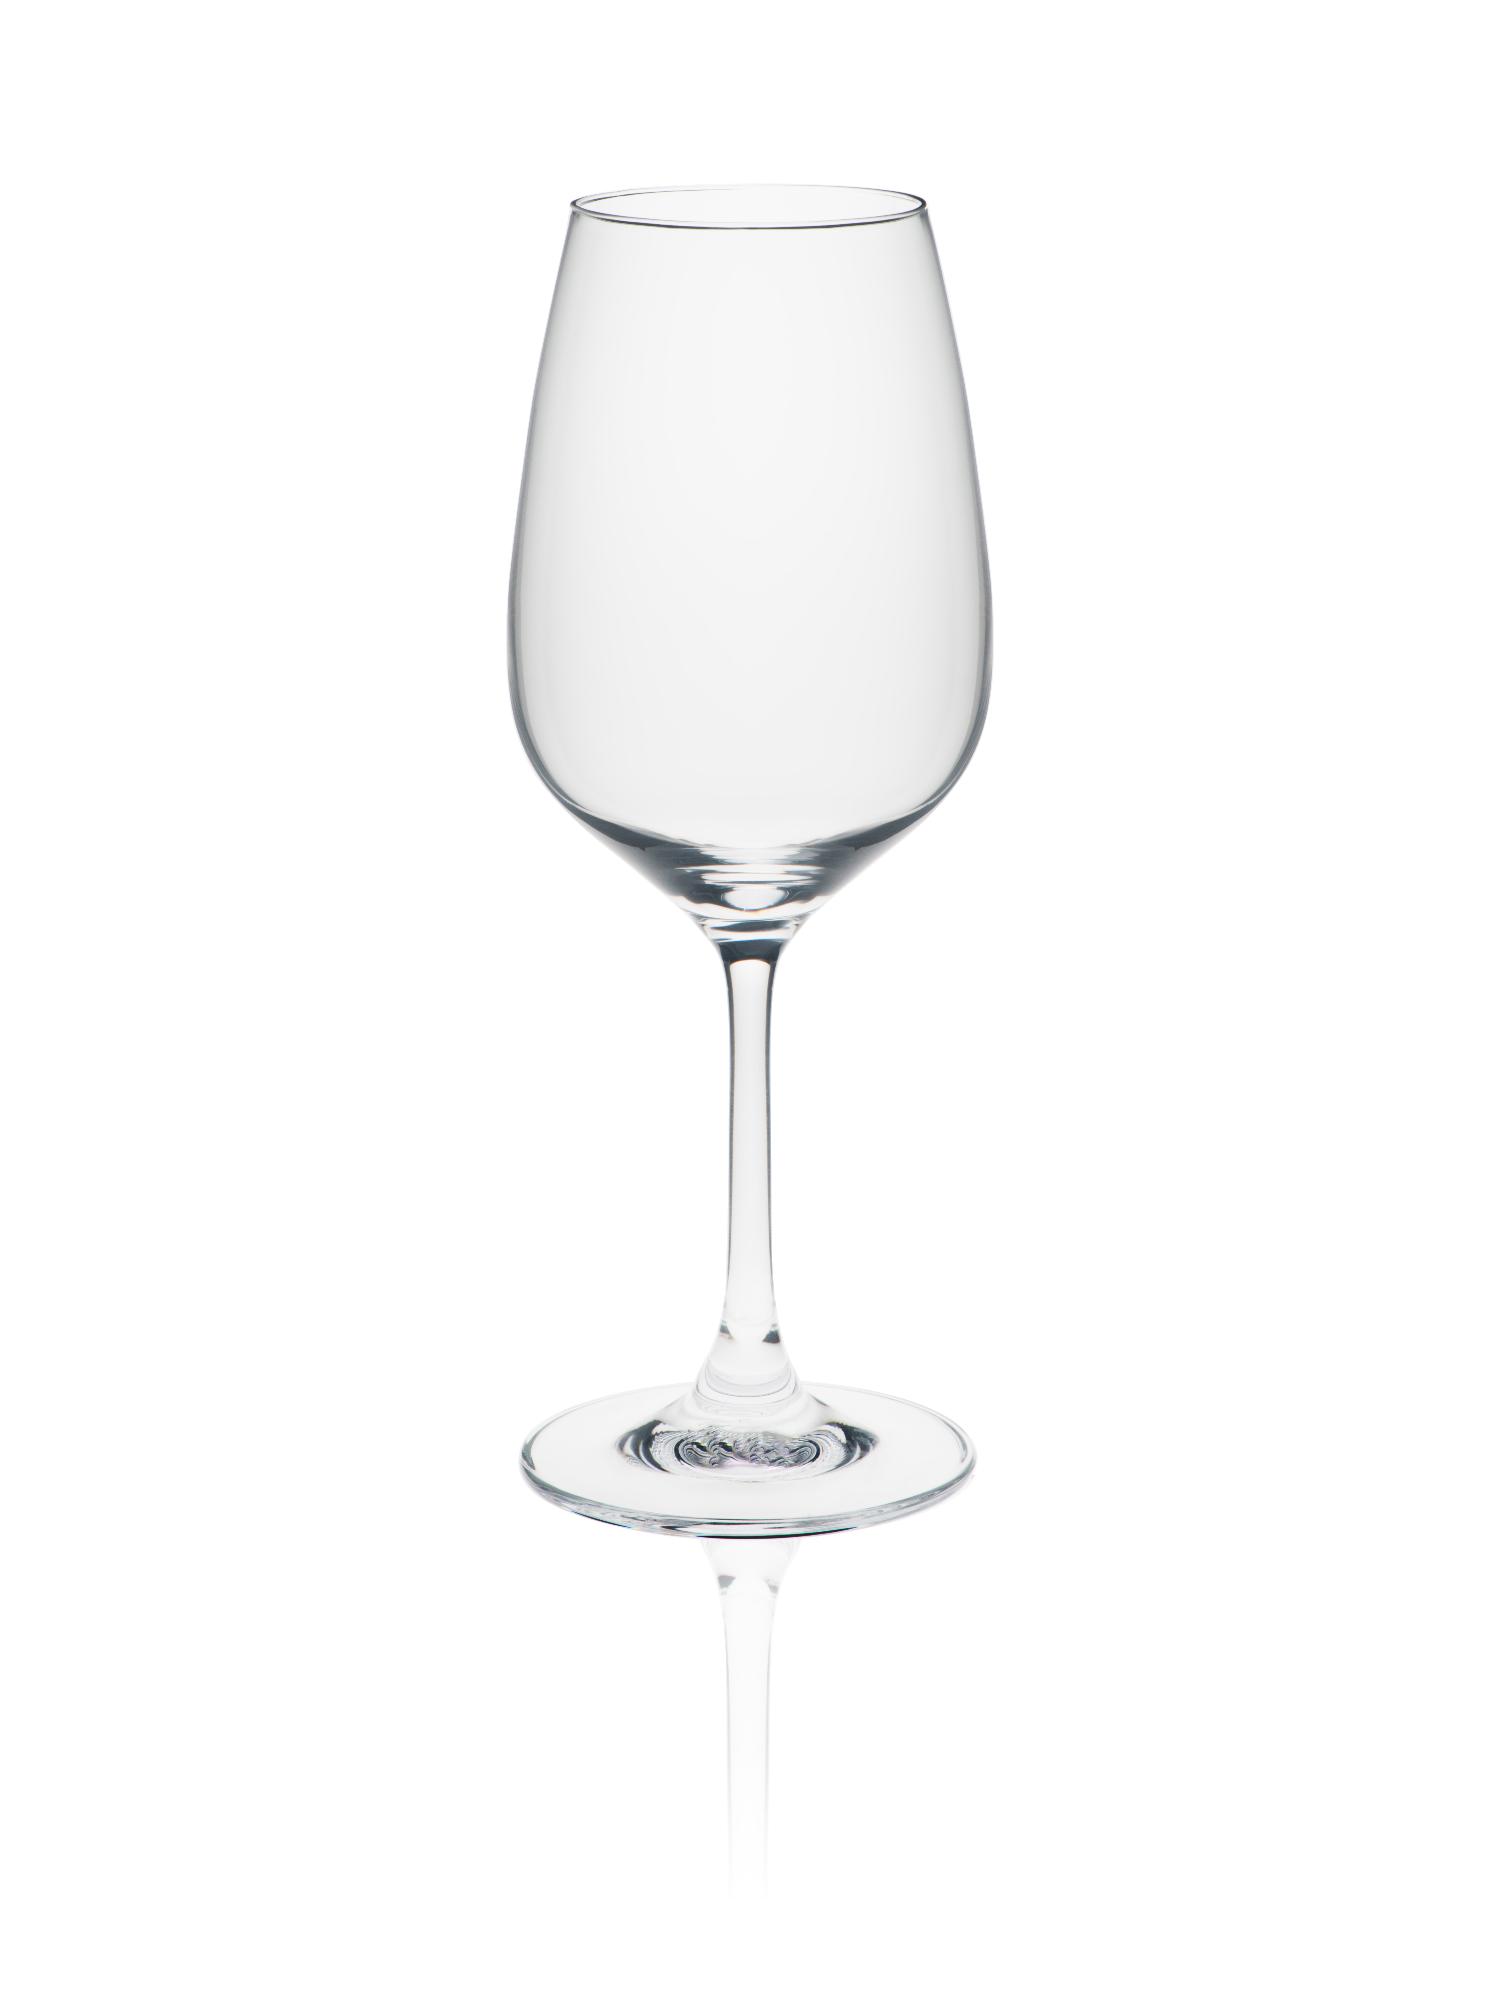 Ratio wine glass, 340ml